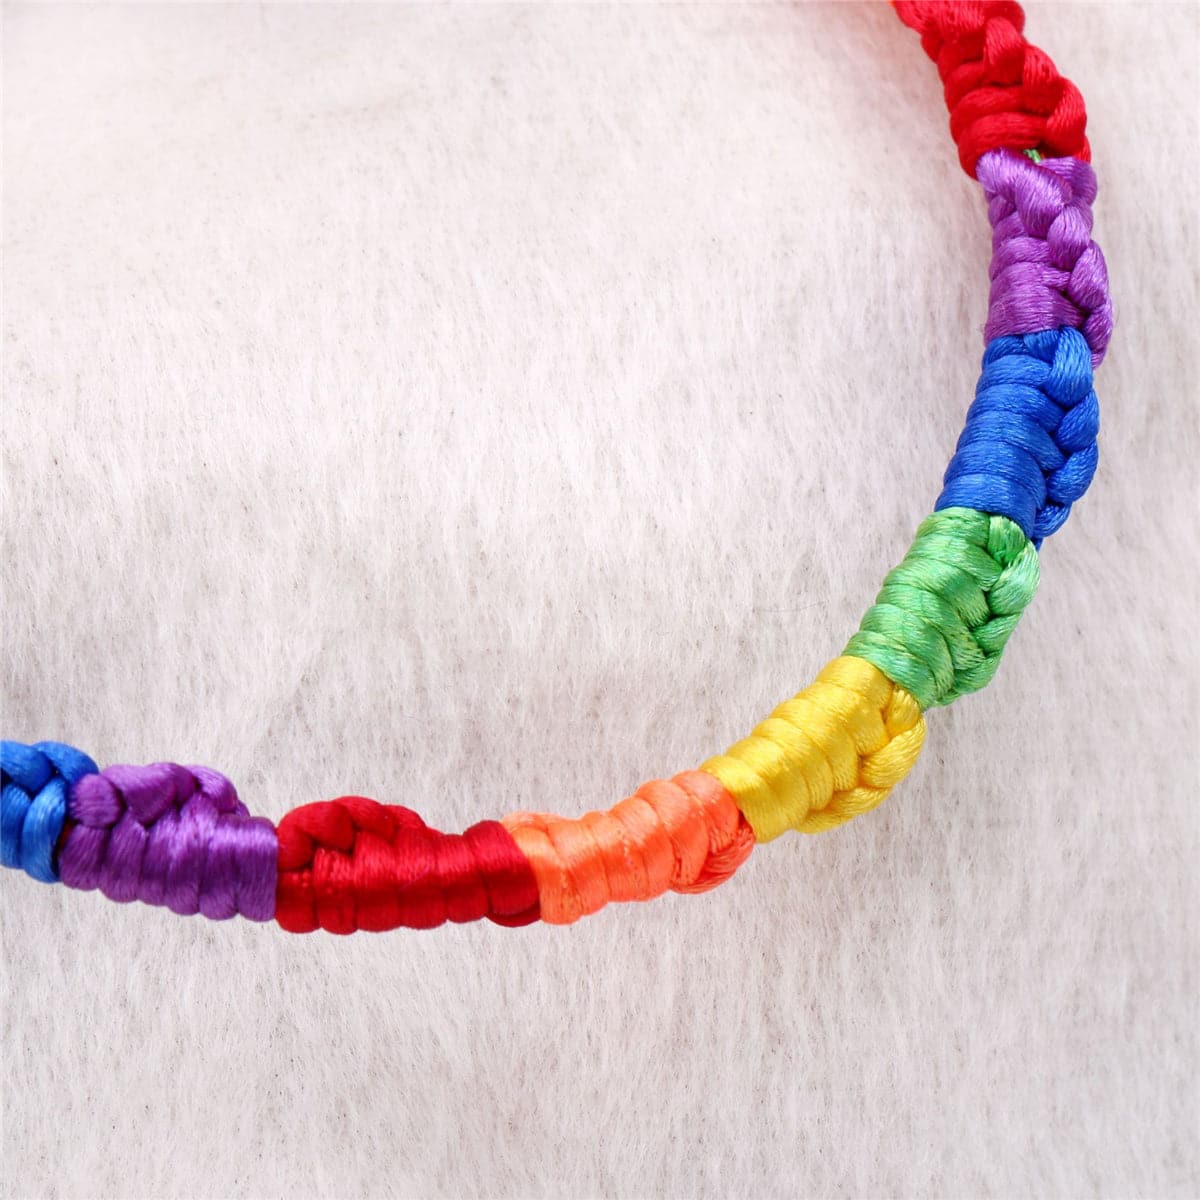 Rainbow Woven Rattan Adjustable Bracelet